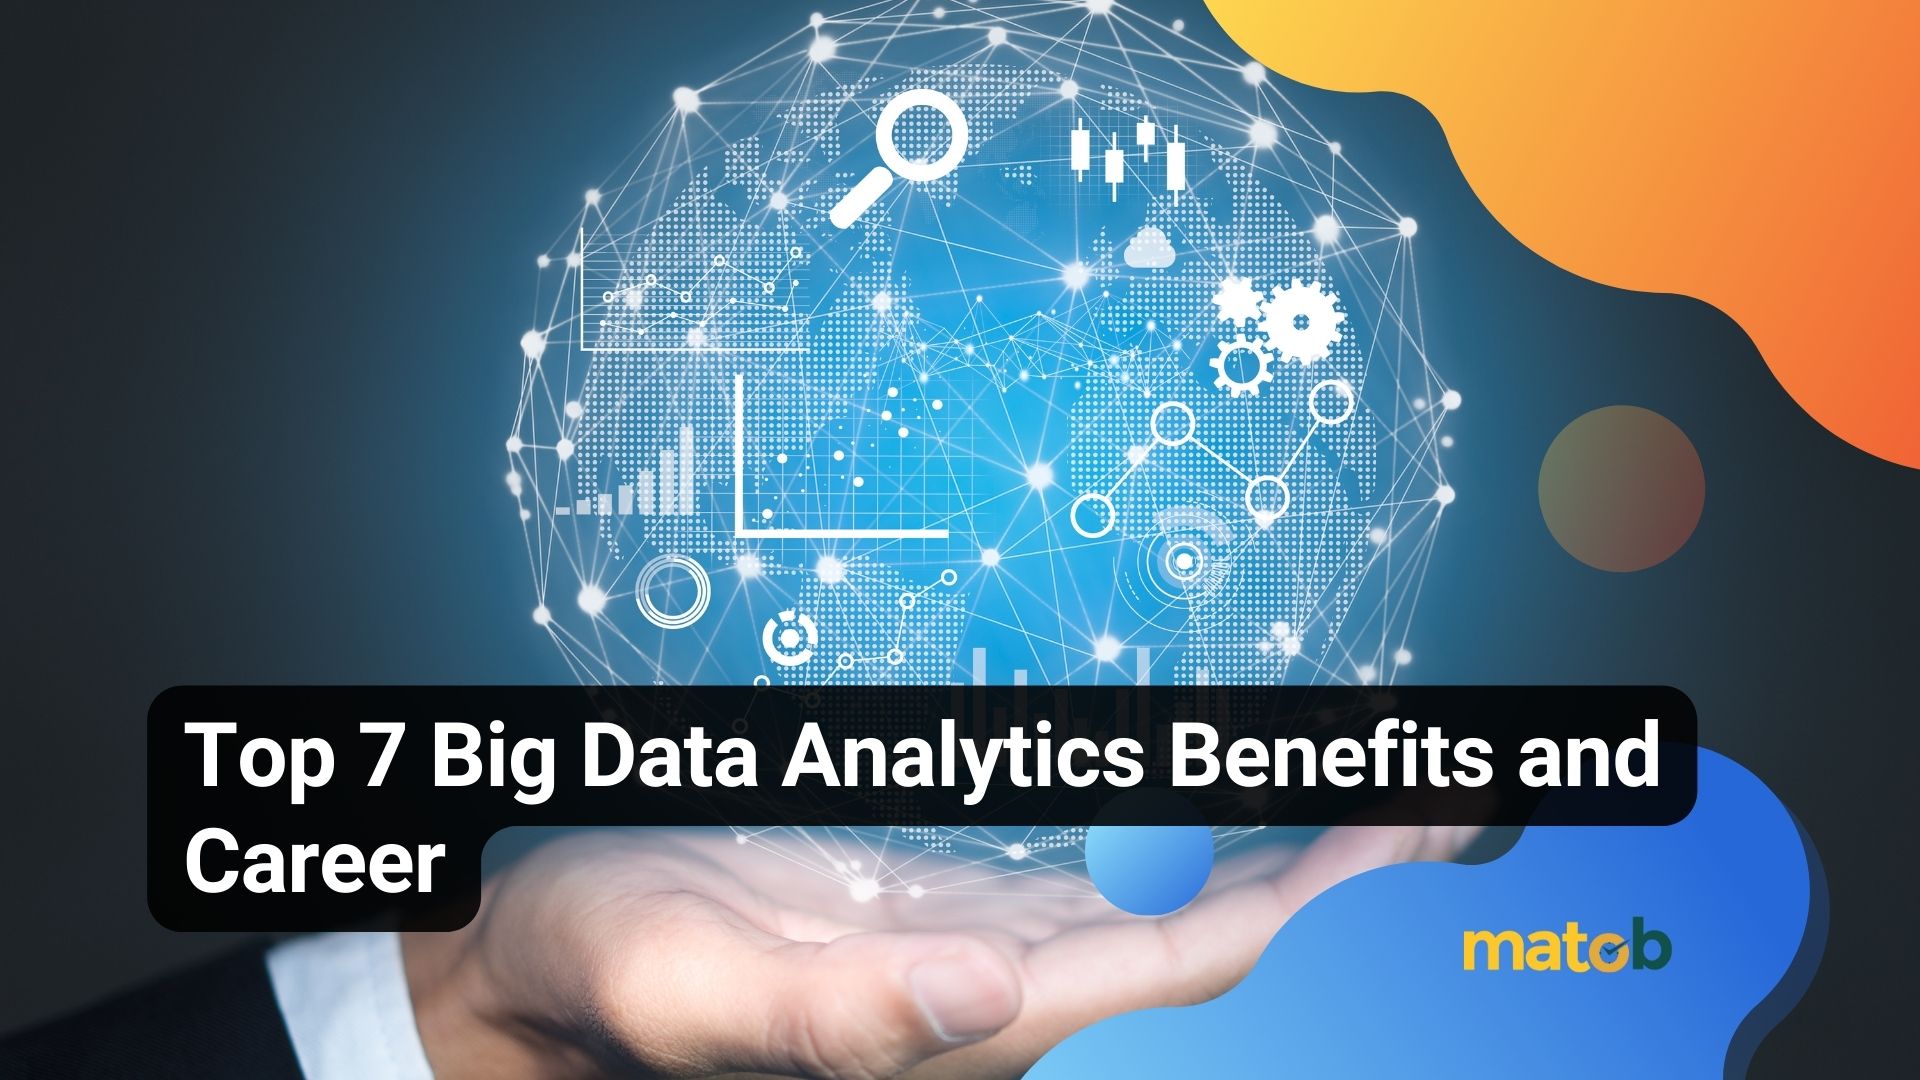 Top 7 Big Data Analytics Benefits and Career